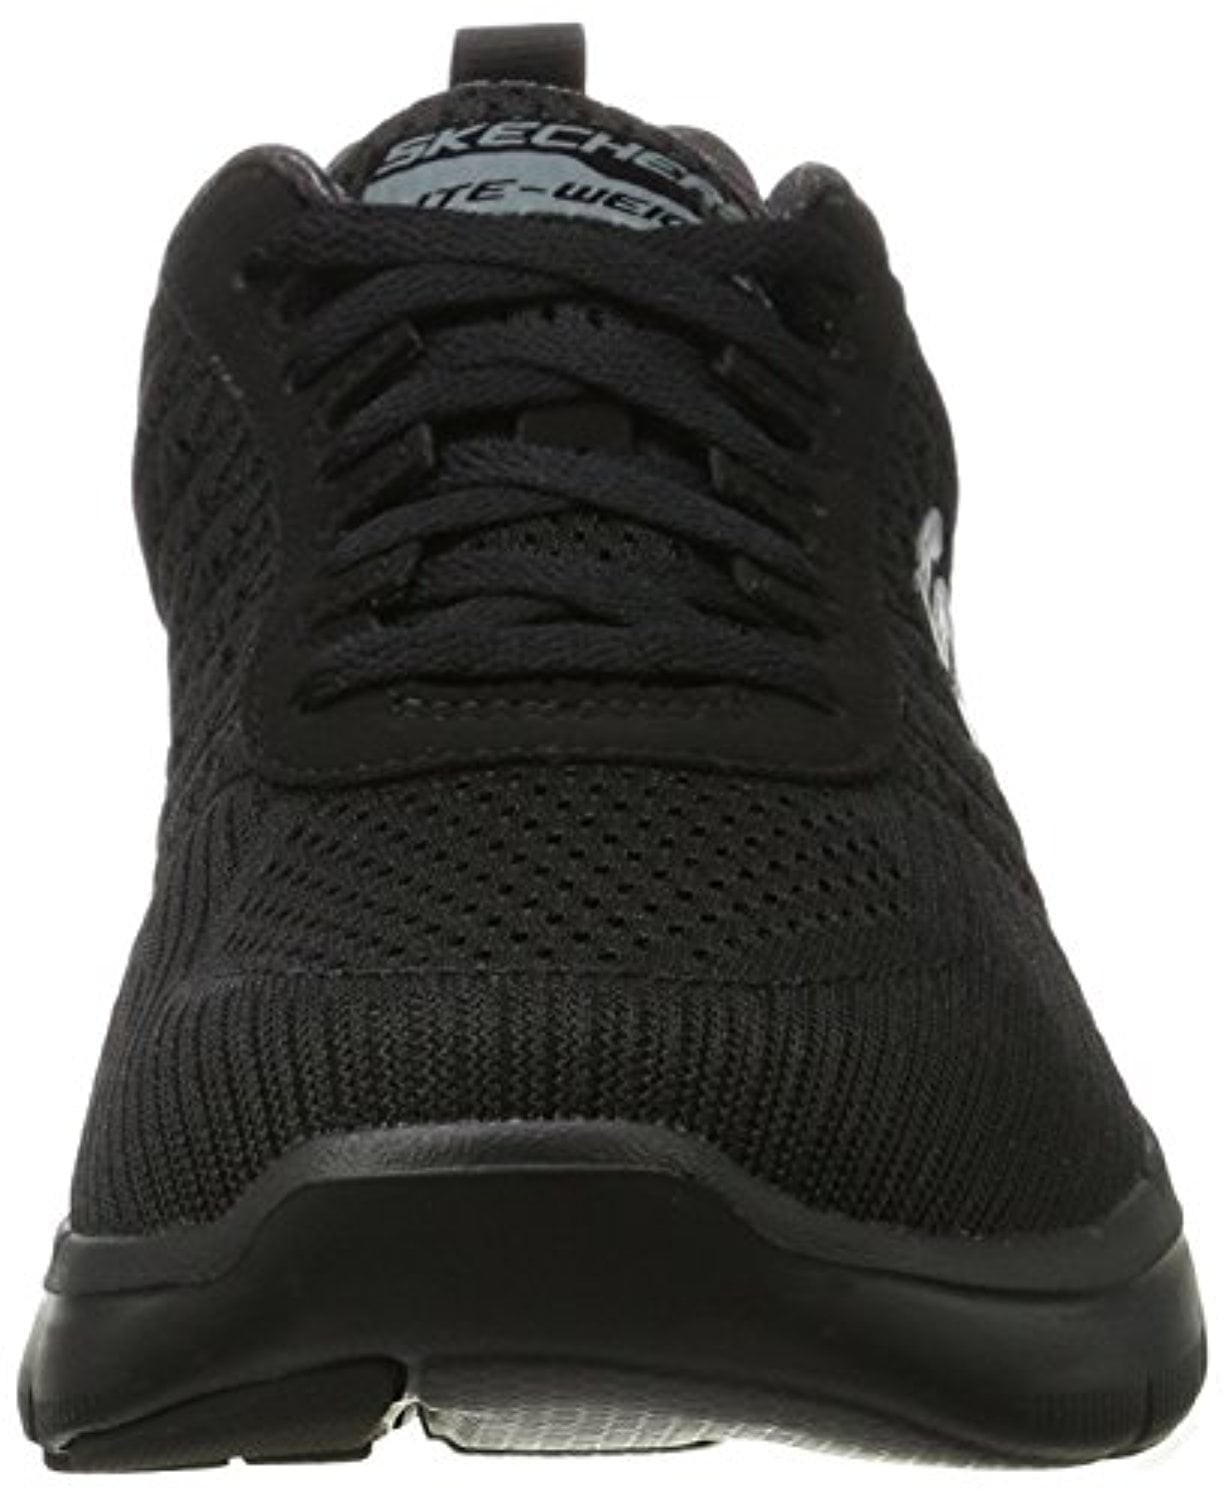 52185 Black Skechers Shoes Comfort Sport Run Train Athletic - Walmart.com